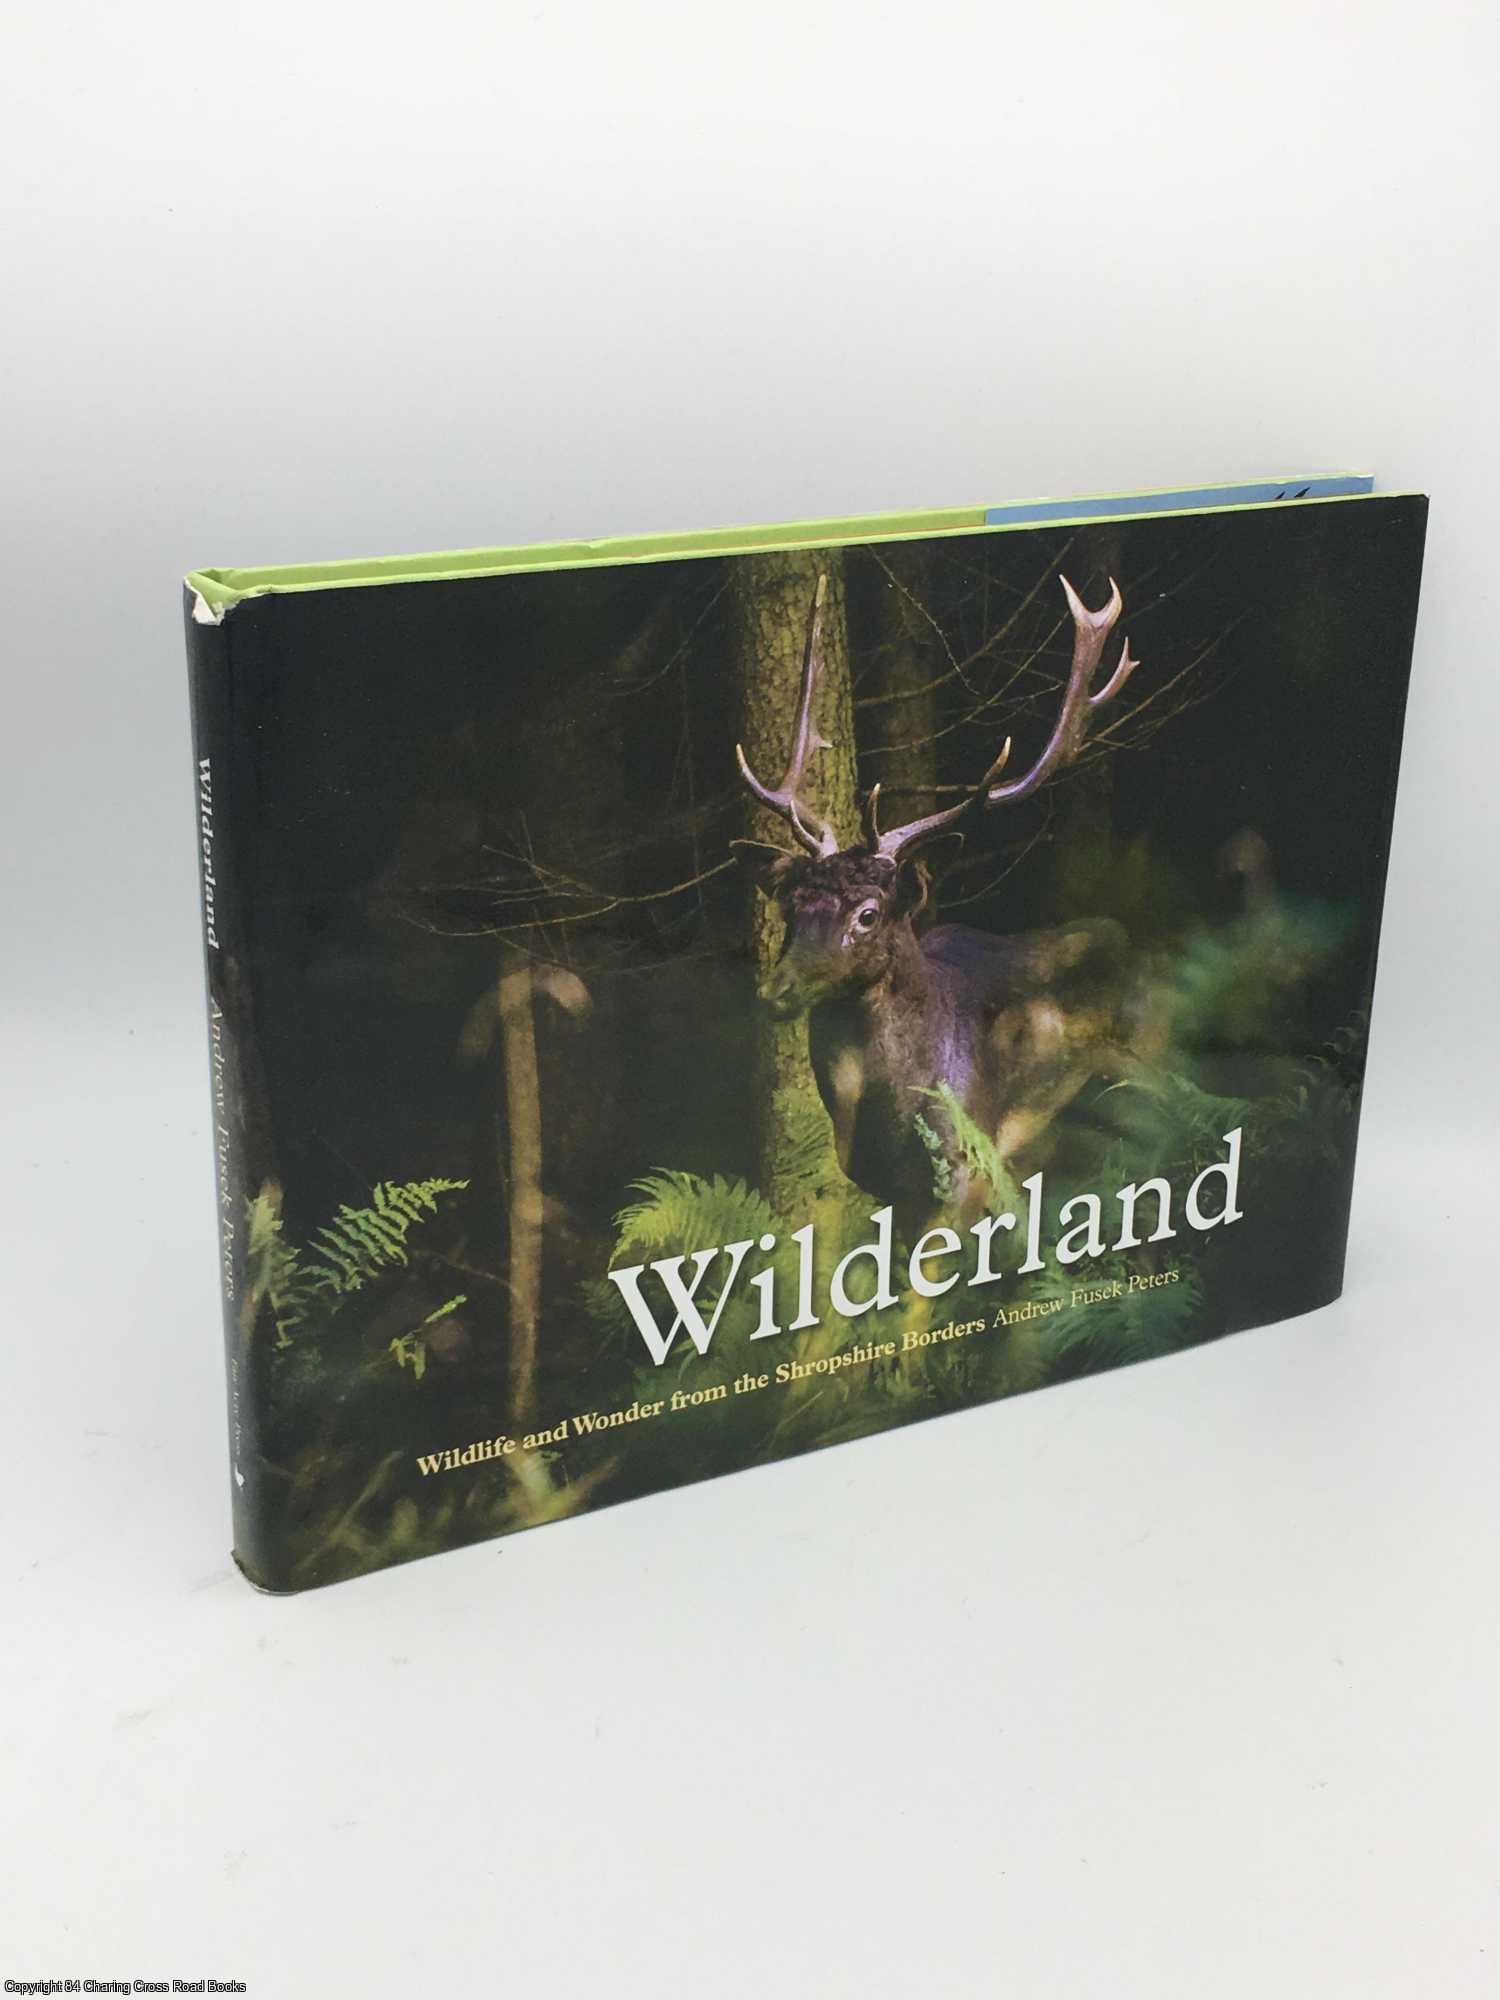 Peters, Andrew Fusek - Wilderland, Wildlife and Wonder from the Shropshire Borders